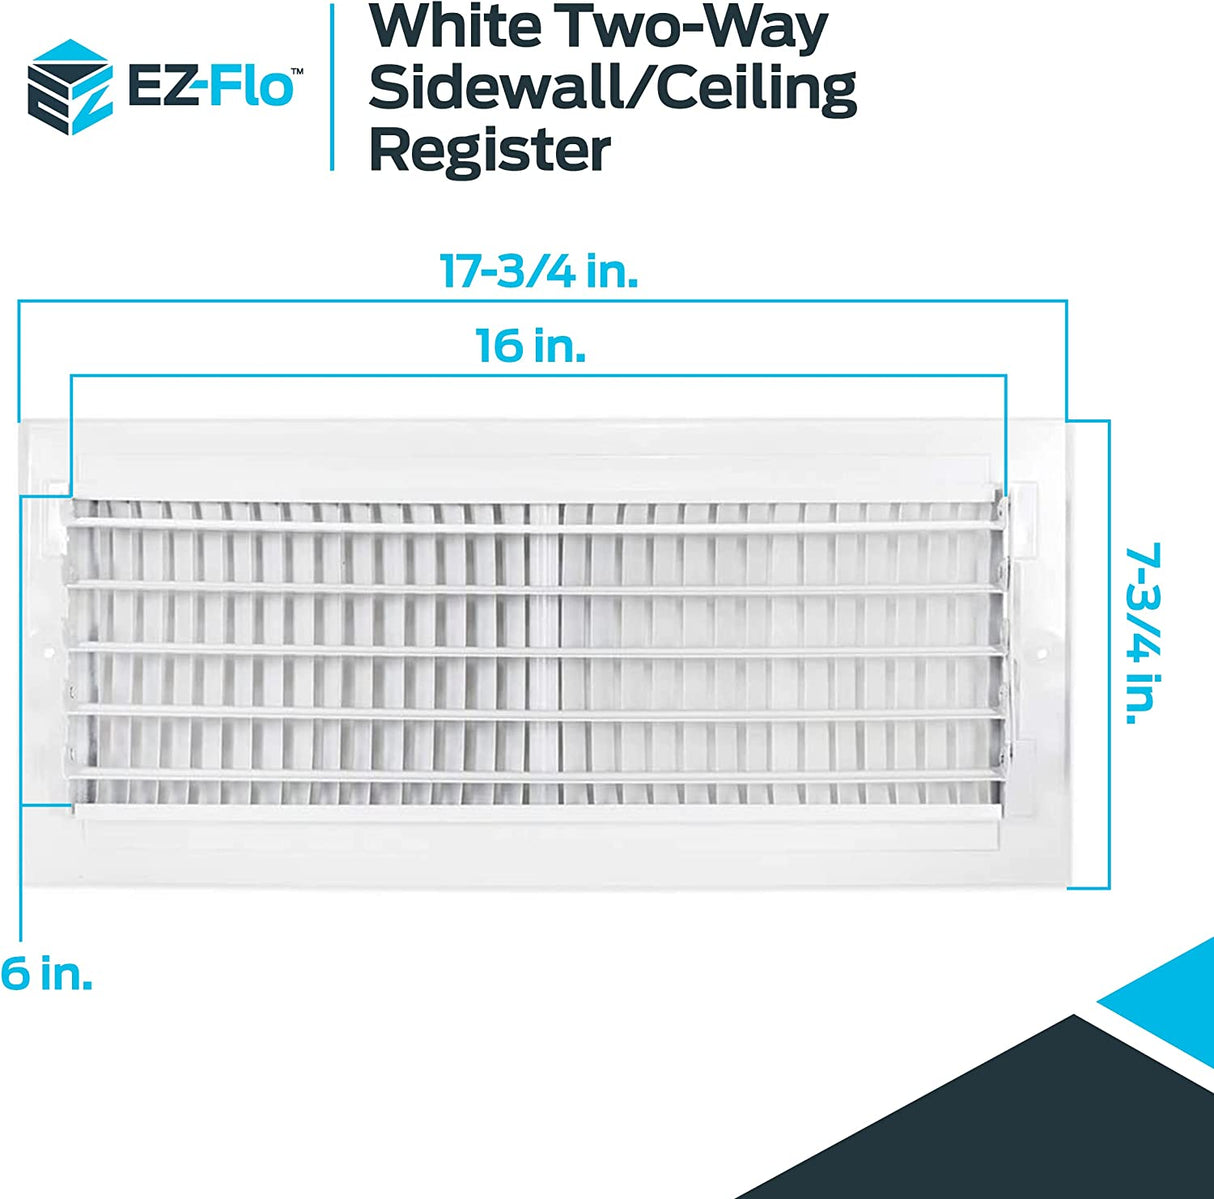 EZ-FLO 16 x 6 Inch Ventilation Steel Sidewall/Ceiling Register Return Air Grille, Steel Duct Opening